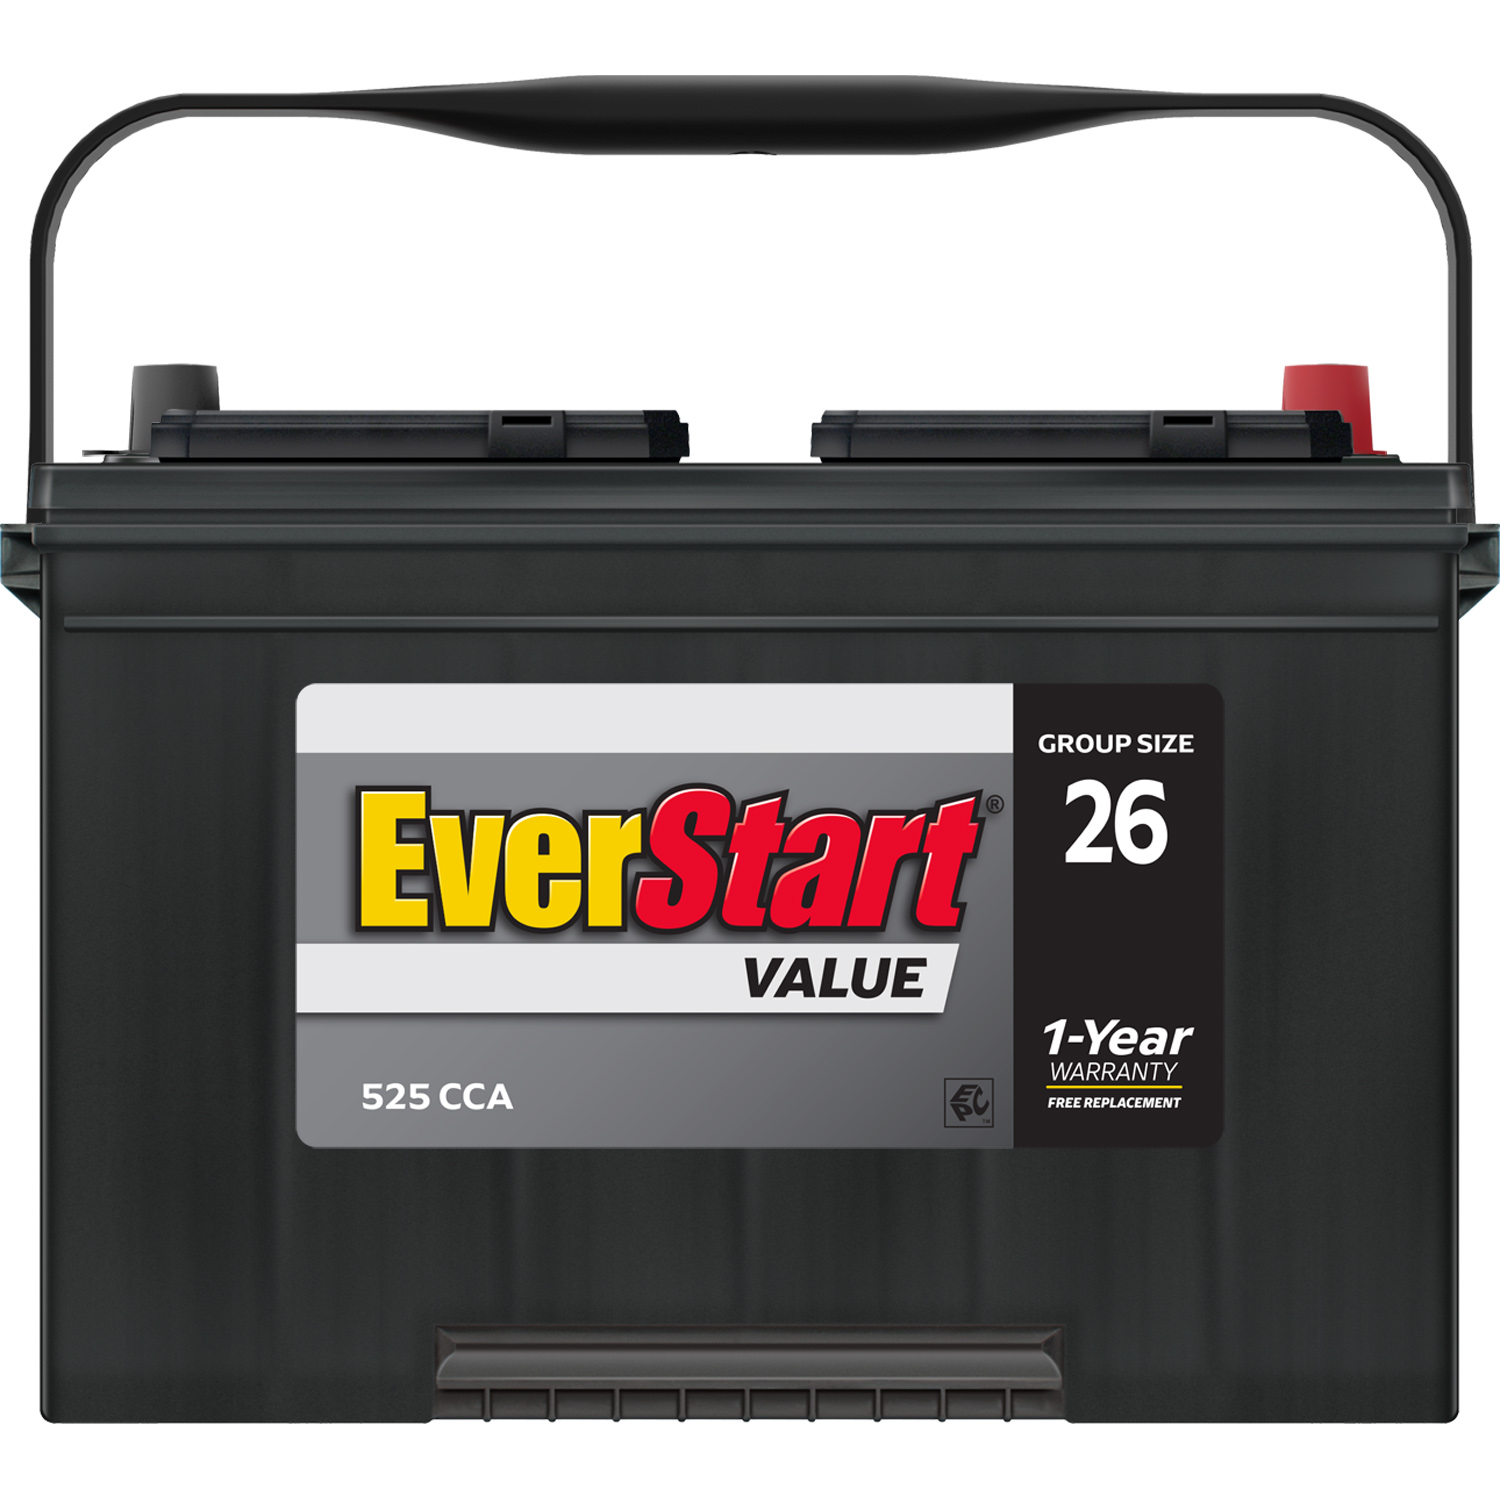 EverStart Value Lead Acid Automotive Battery, Group Size 26 12 Volt, 525 CCA - image 3 of 7